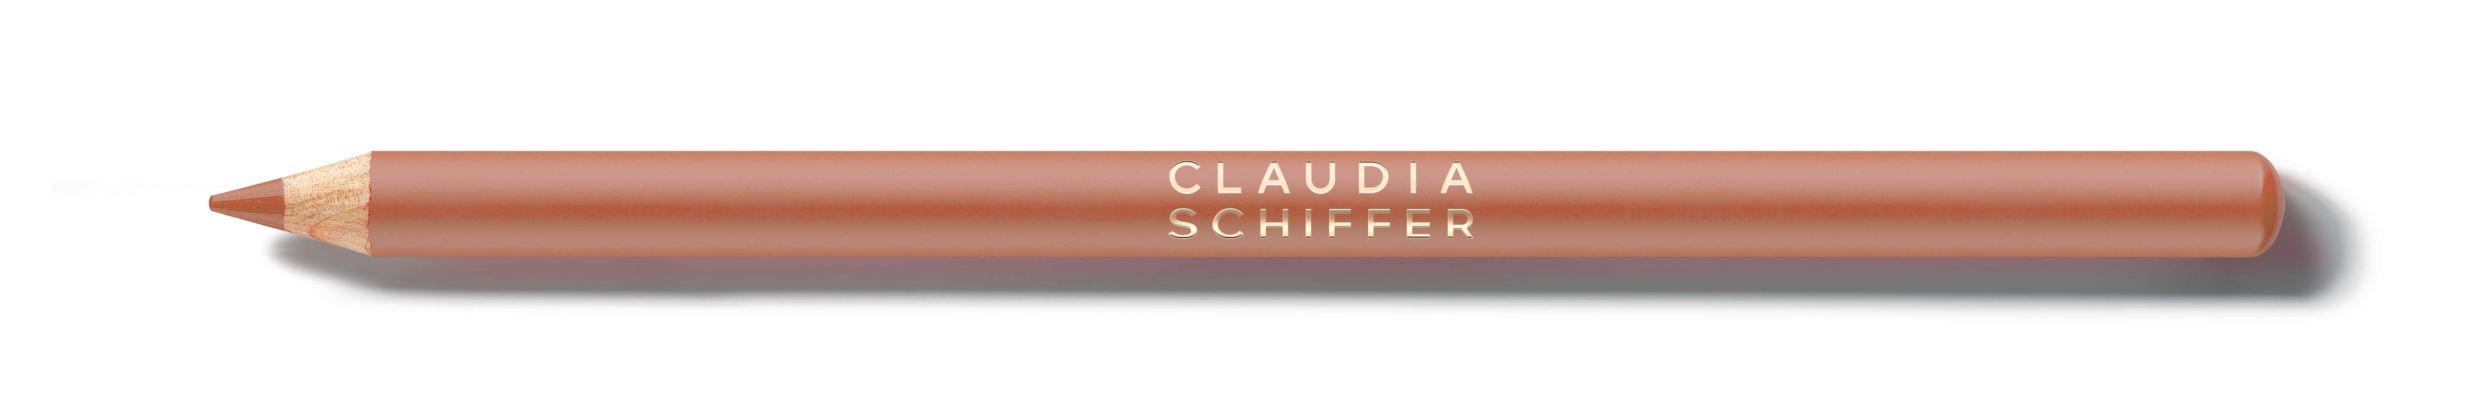 Artdeco claudia Schiffer lip liner 10 Praline 